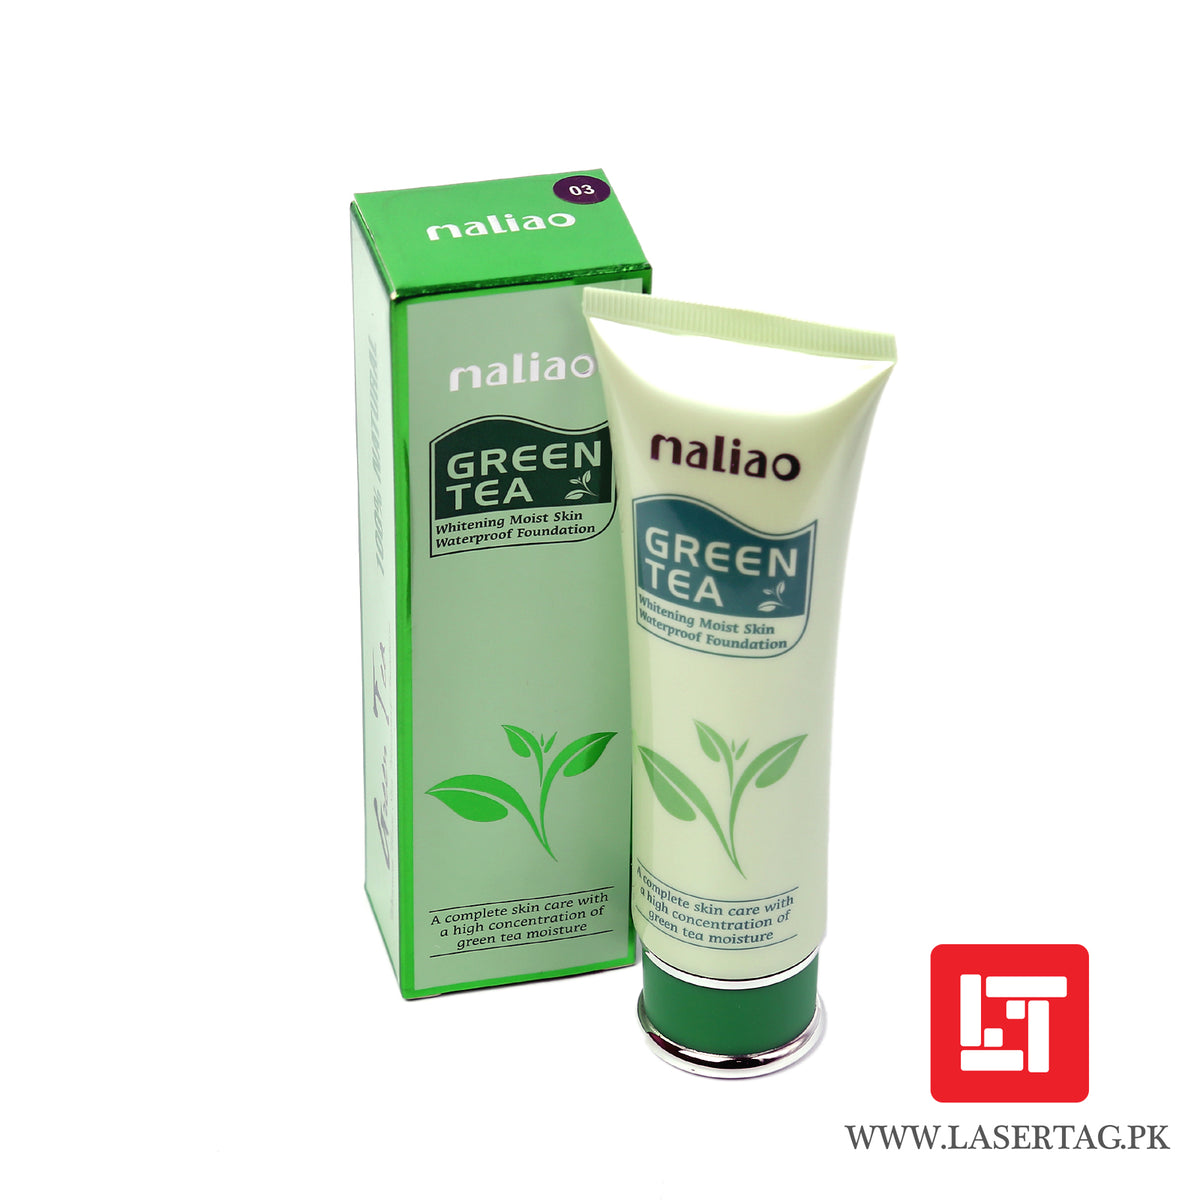 Maliao Green Tea Whitening Moist Skin Waterproof Foundation M104-03 80g freeshipping - lasertag.pk